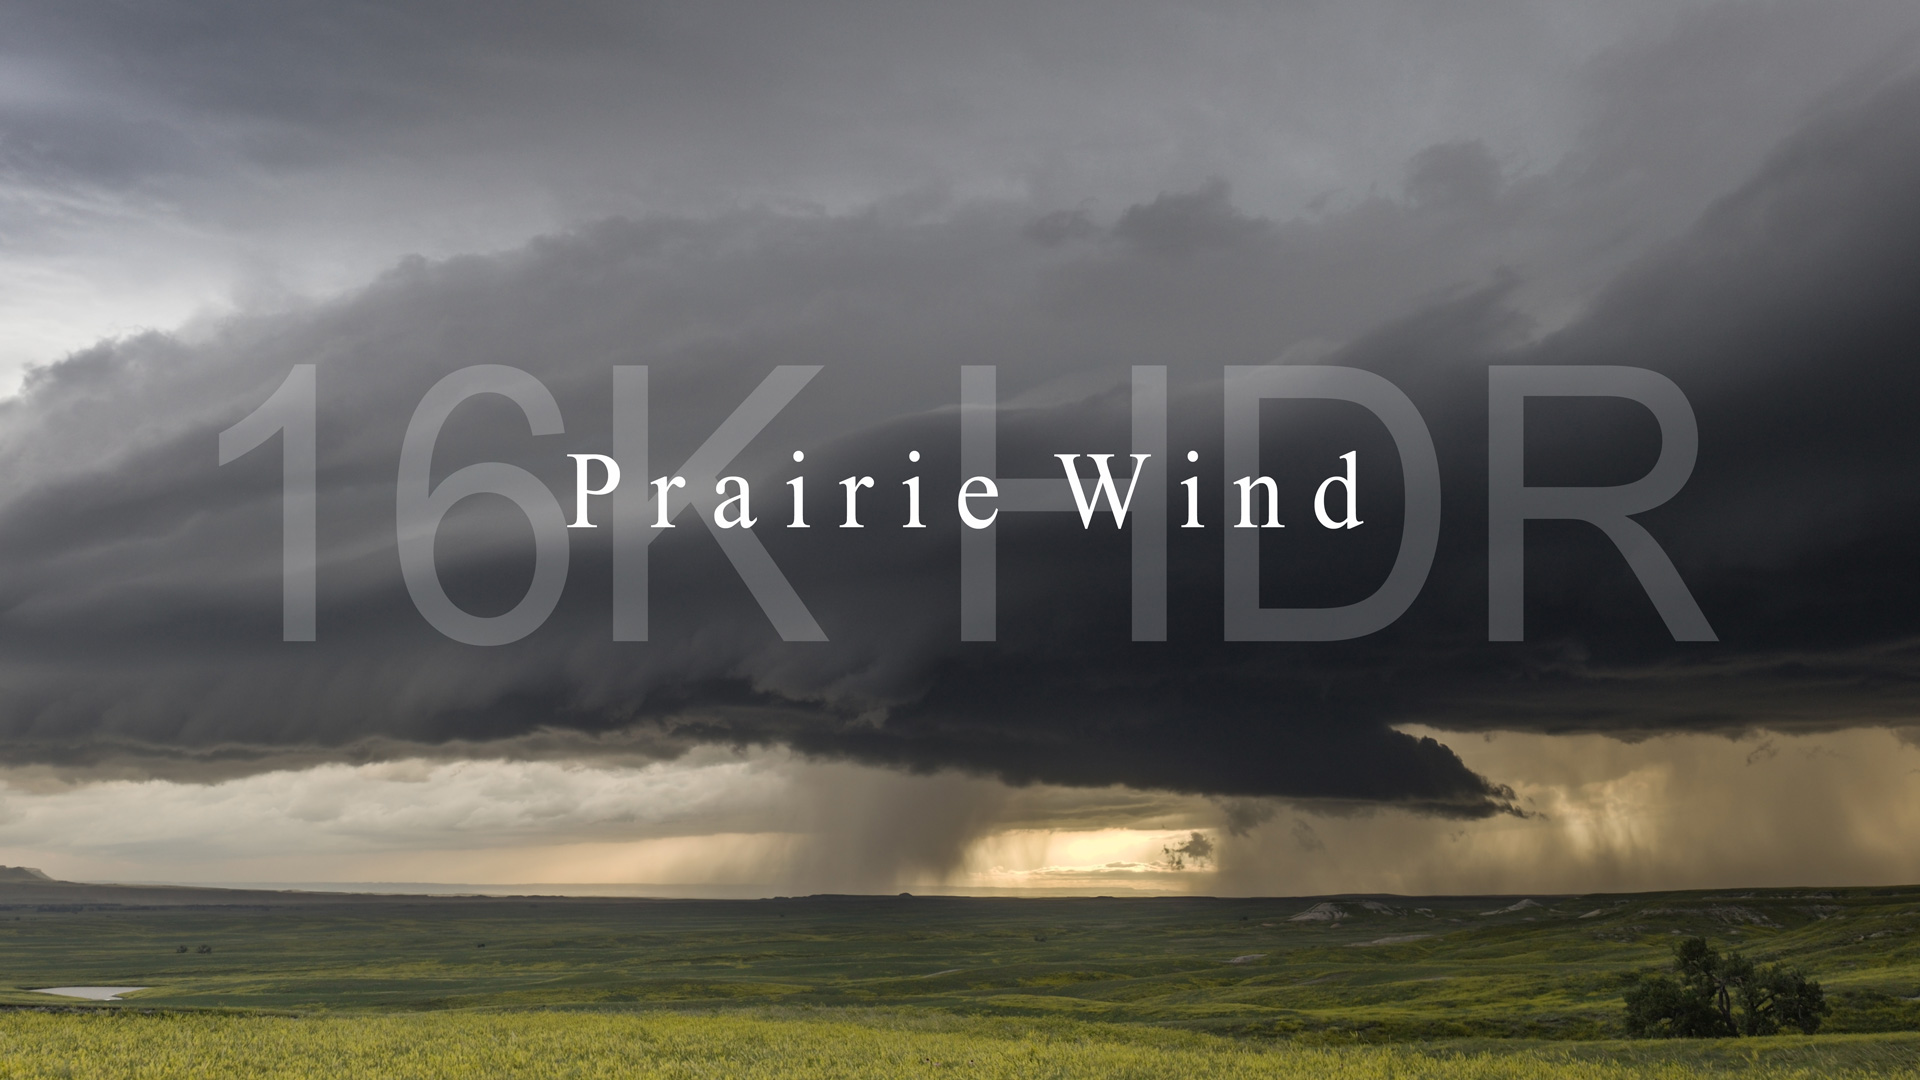 "Prairie Wind" in 16K